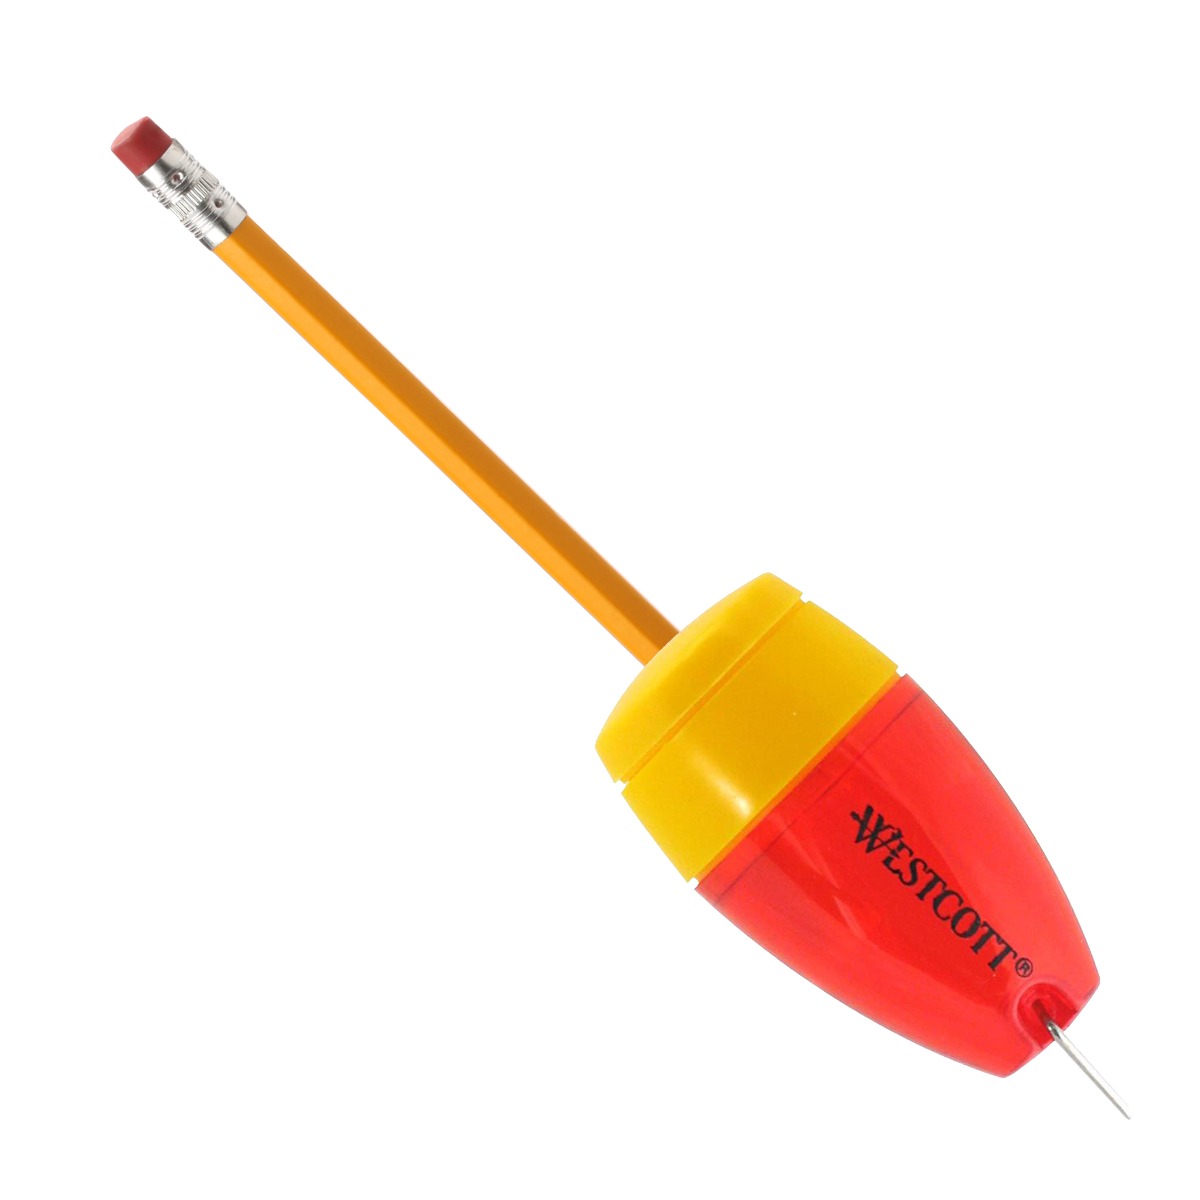 Westcott Plastic Manual Pencil Sharpener, Assorted Colors (14073)